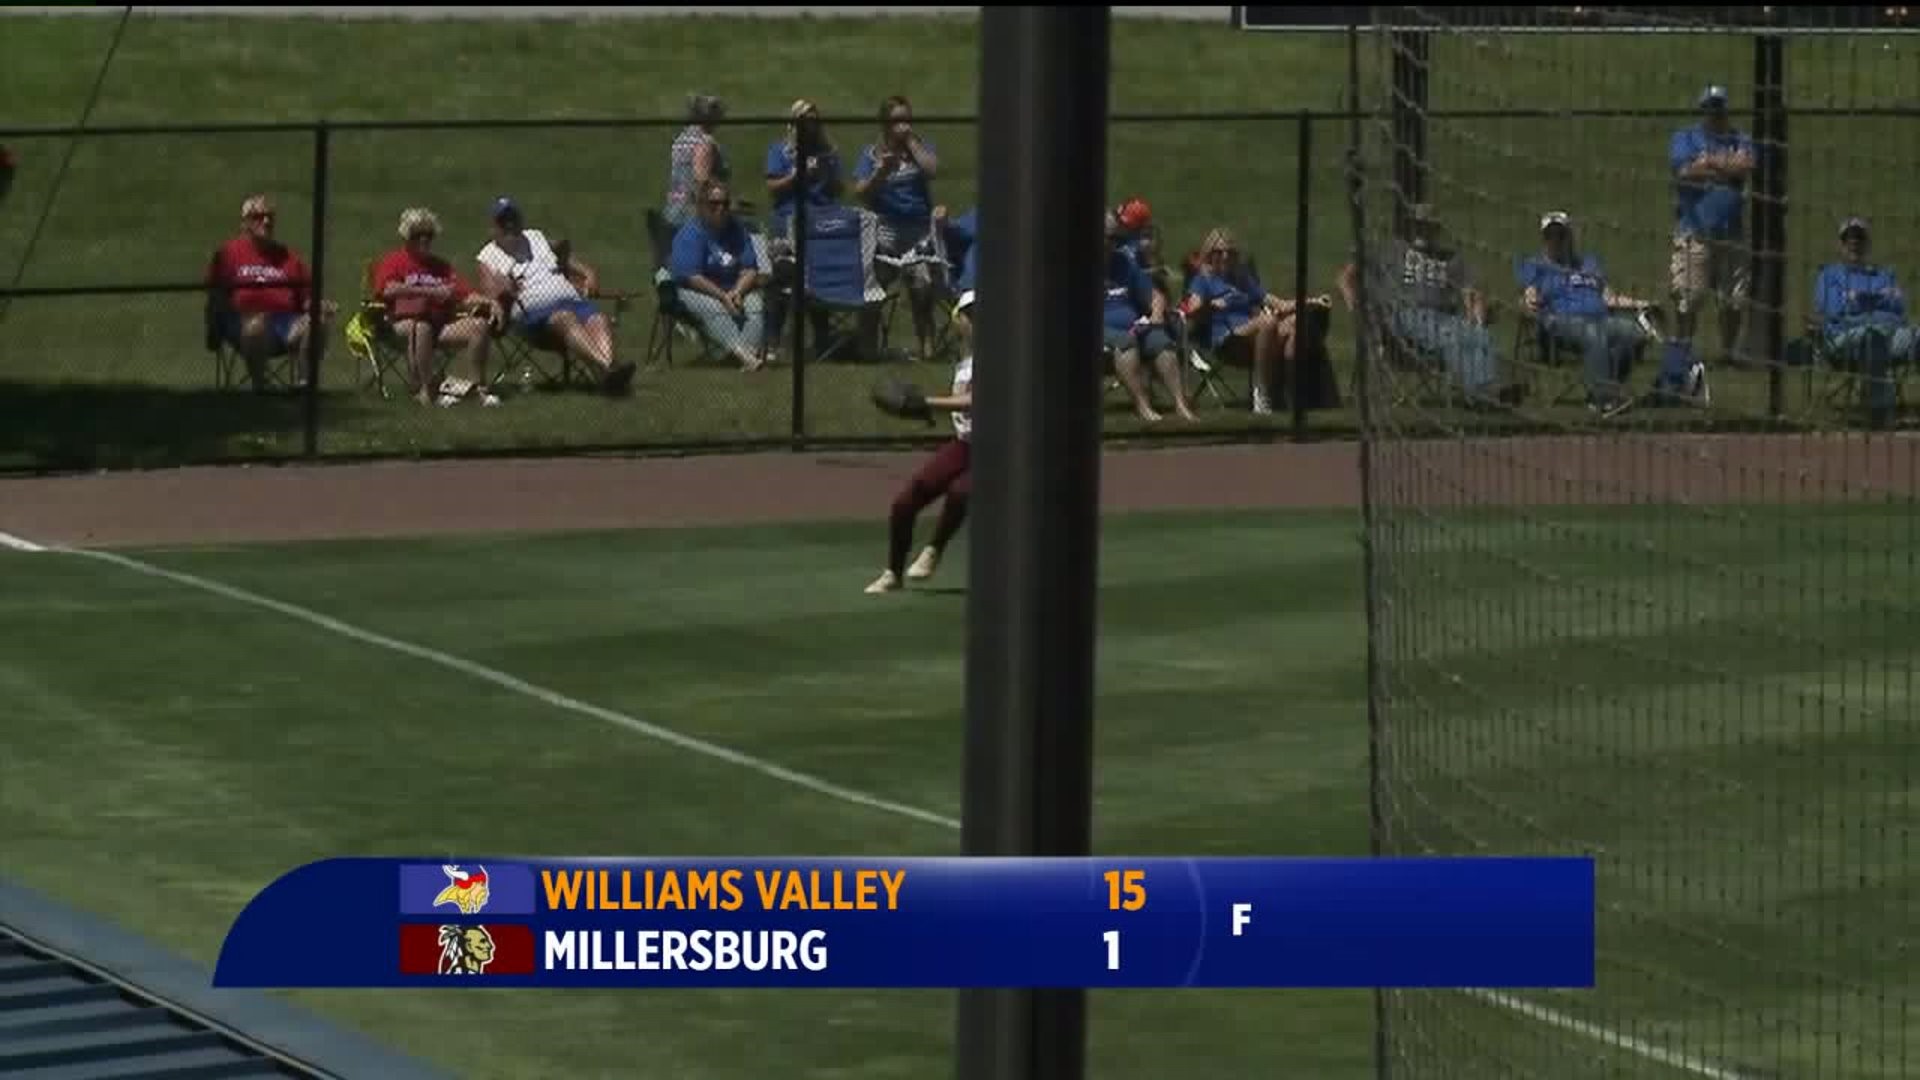 Williams Valley vs Millersburg softball